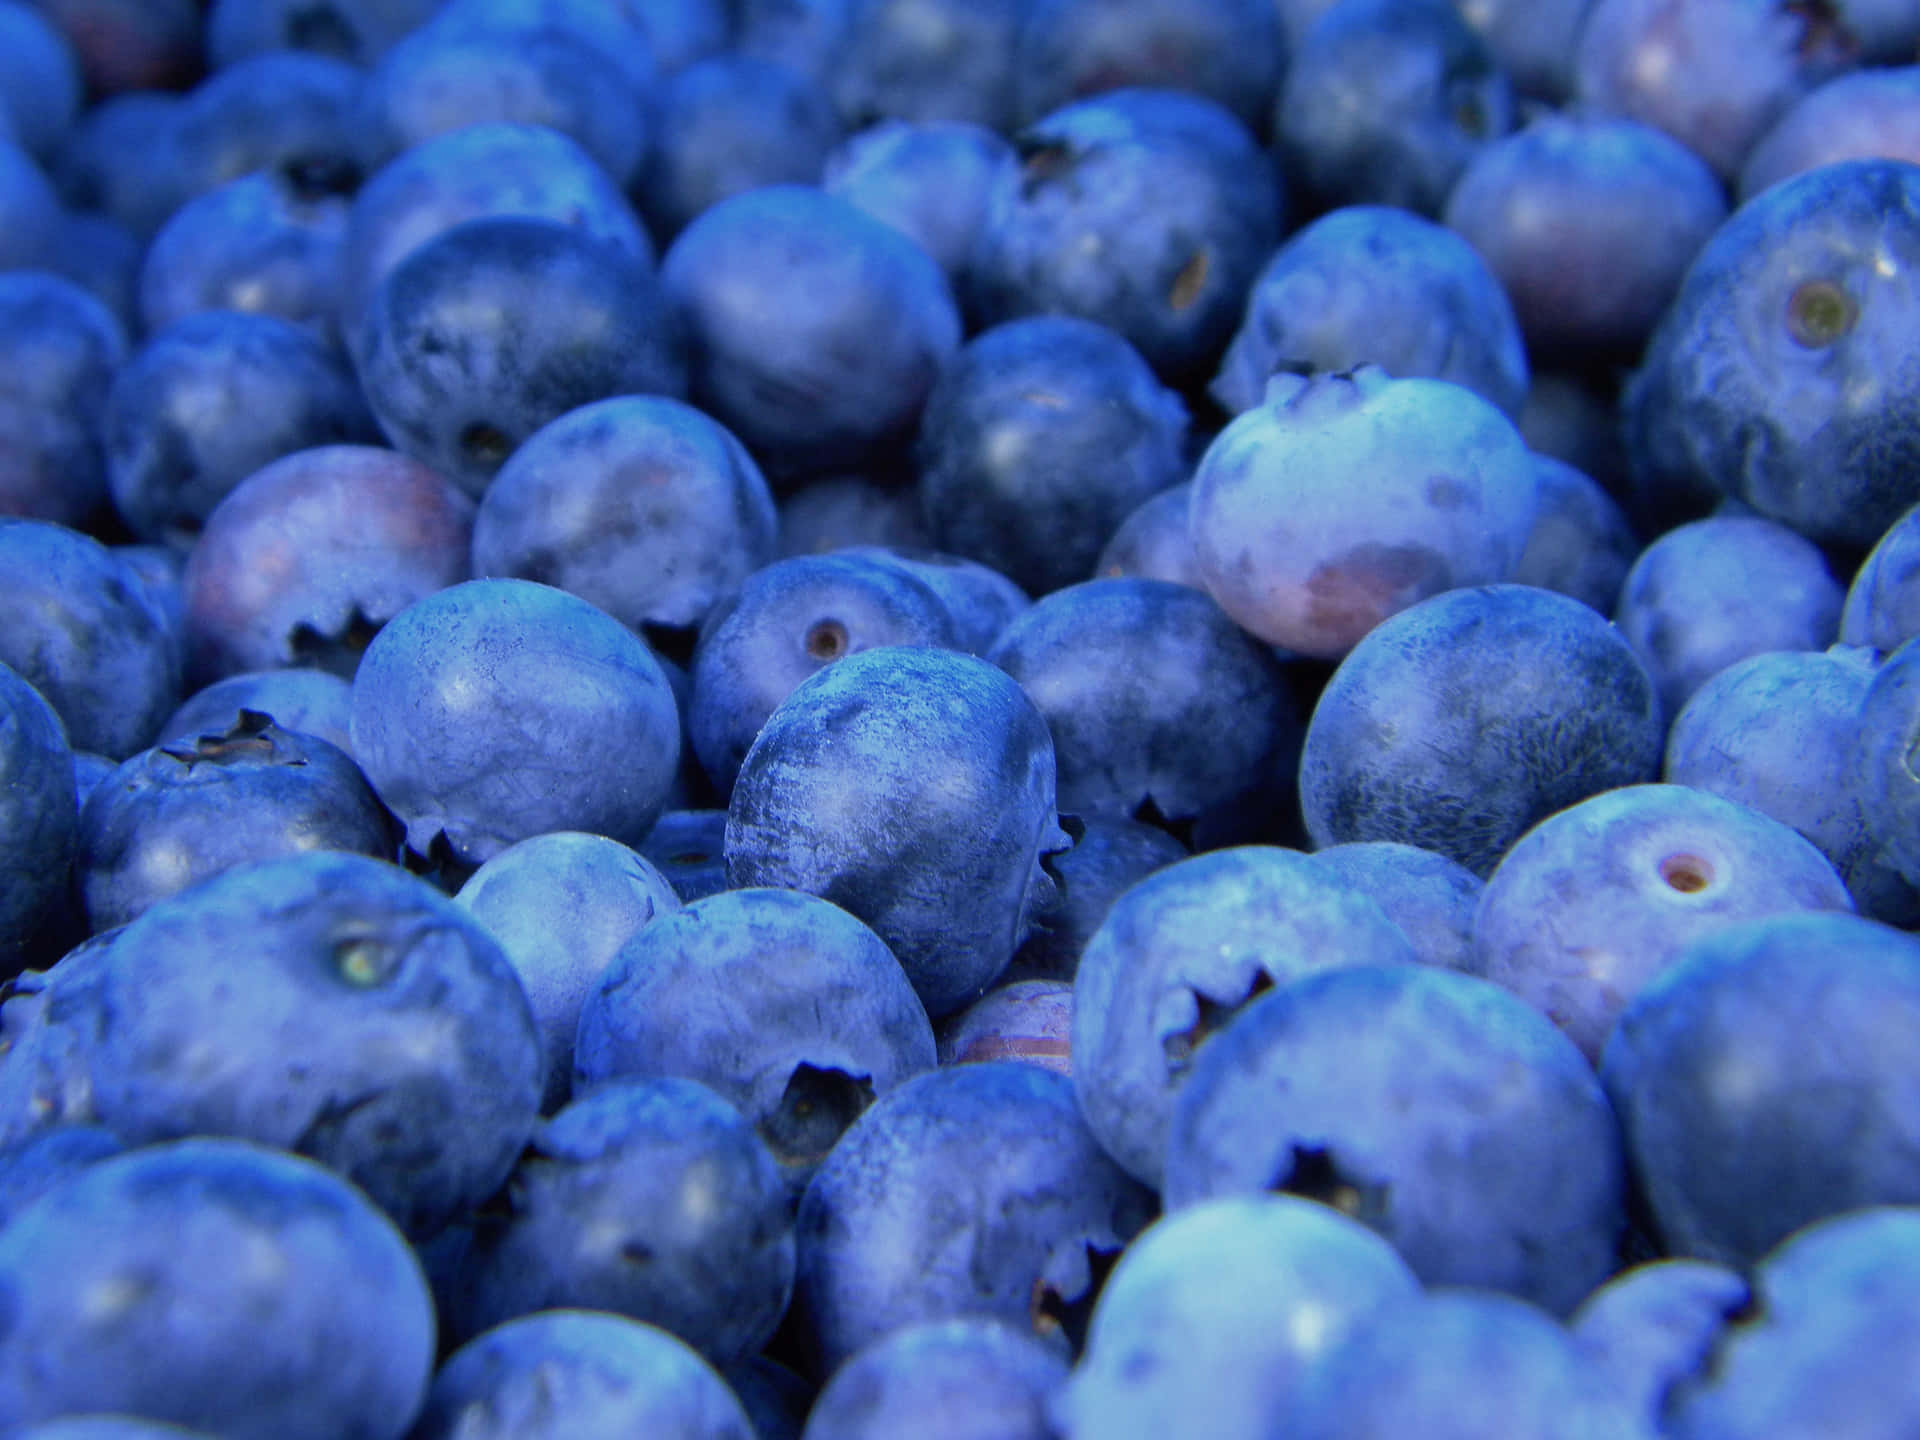 Caption: Freshly Picked Blueberries